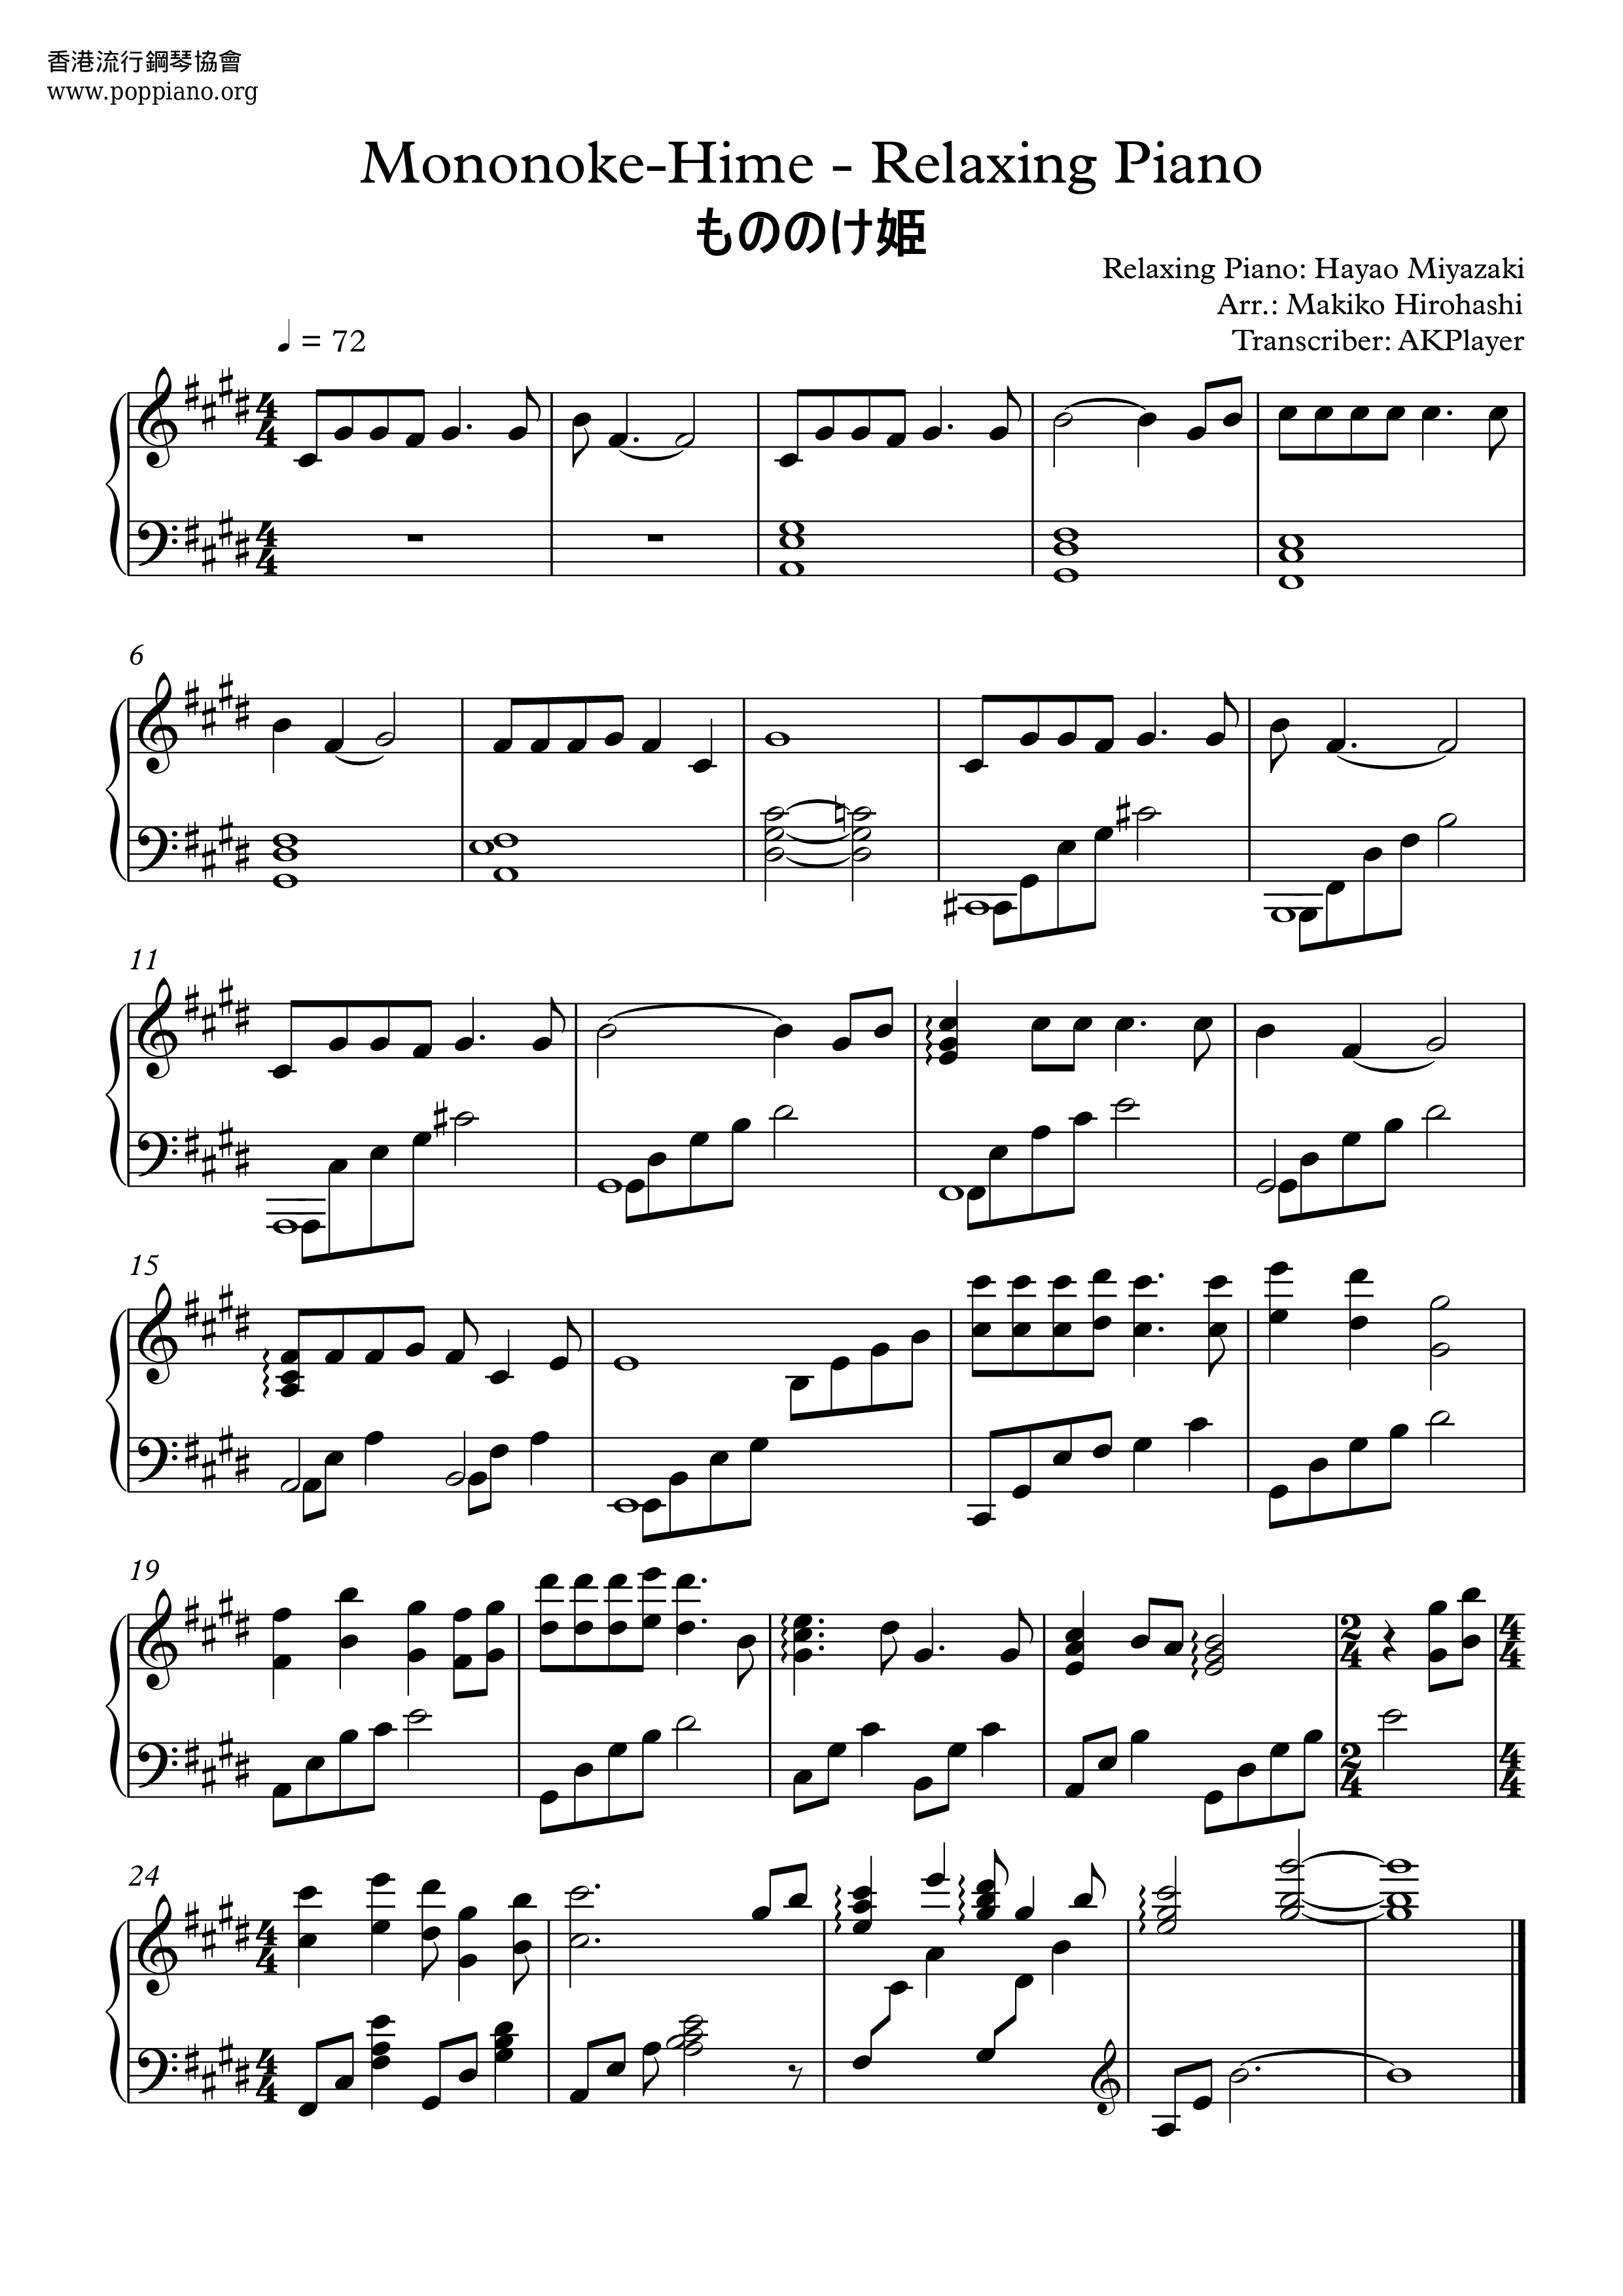 Princess Mononoke - Hime Score